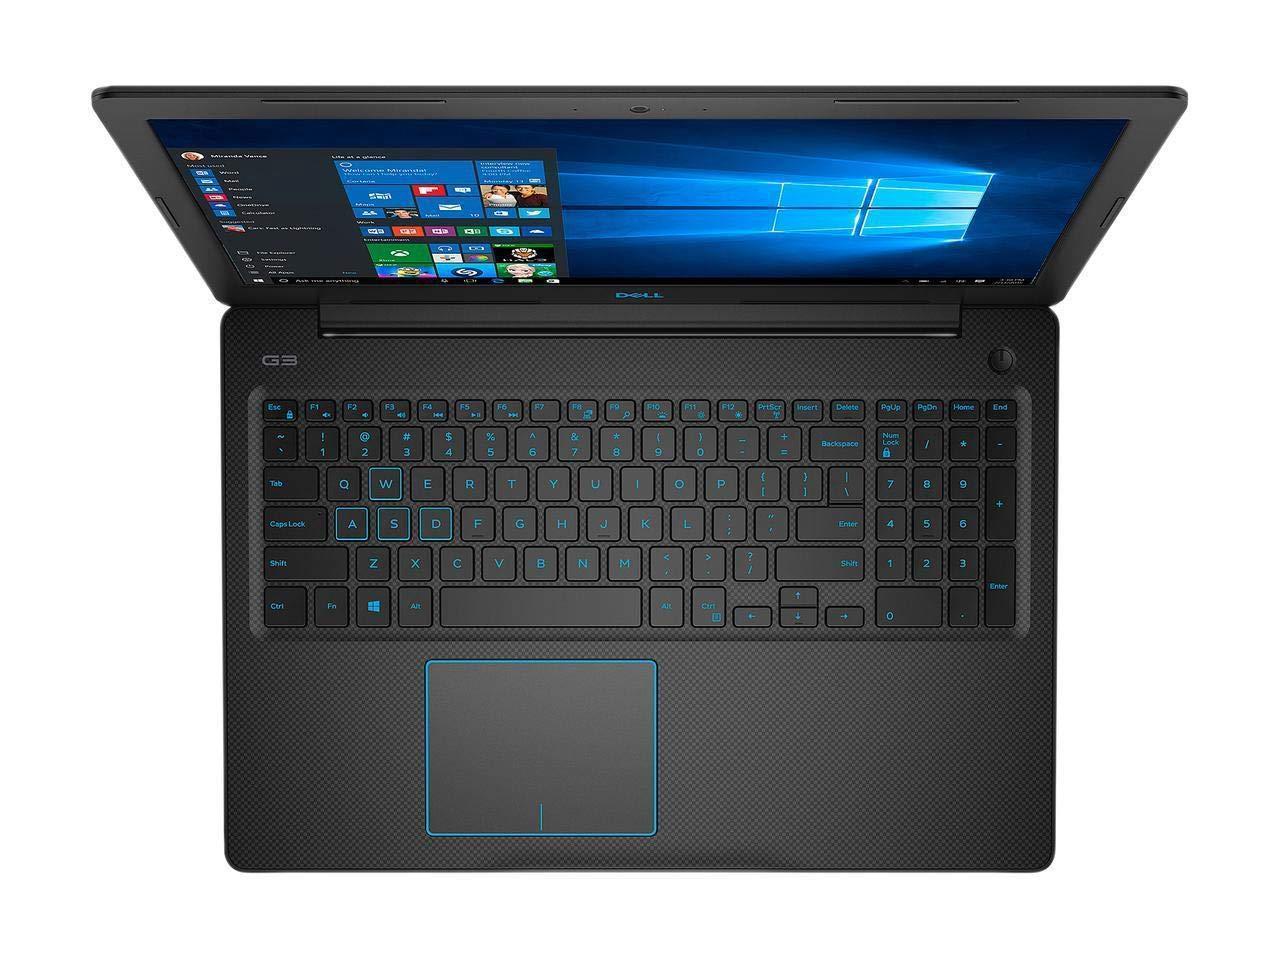 Newest Dell 15.6" FHD IPS High-Performance Gaming Laptop | Intel Core i5-8300H Quad-Core| 16GB DDR4 RAM |128GB M.2 SSD+1TB HDD |NVIDIA GeForce GTX 1050Ti 4GB |Backlit Keyboard | MaxxAudio|Windows 10